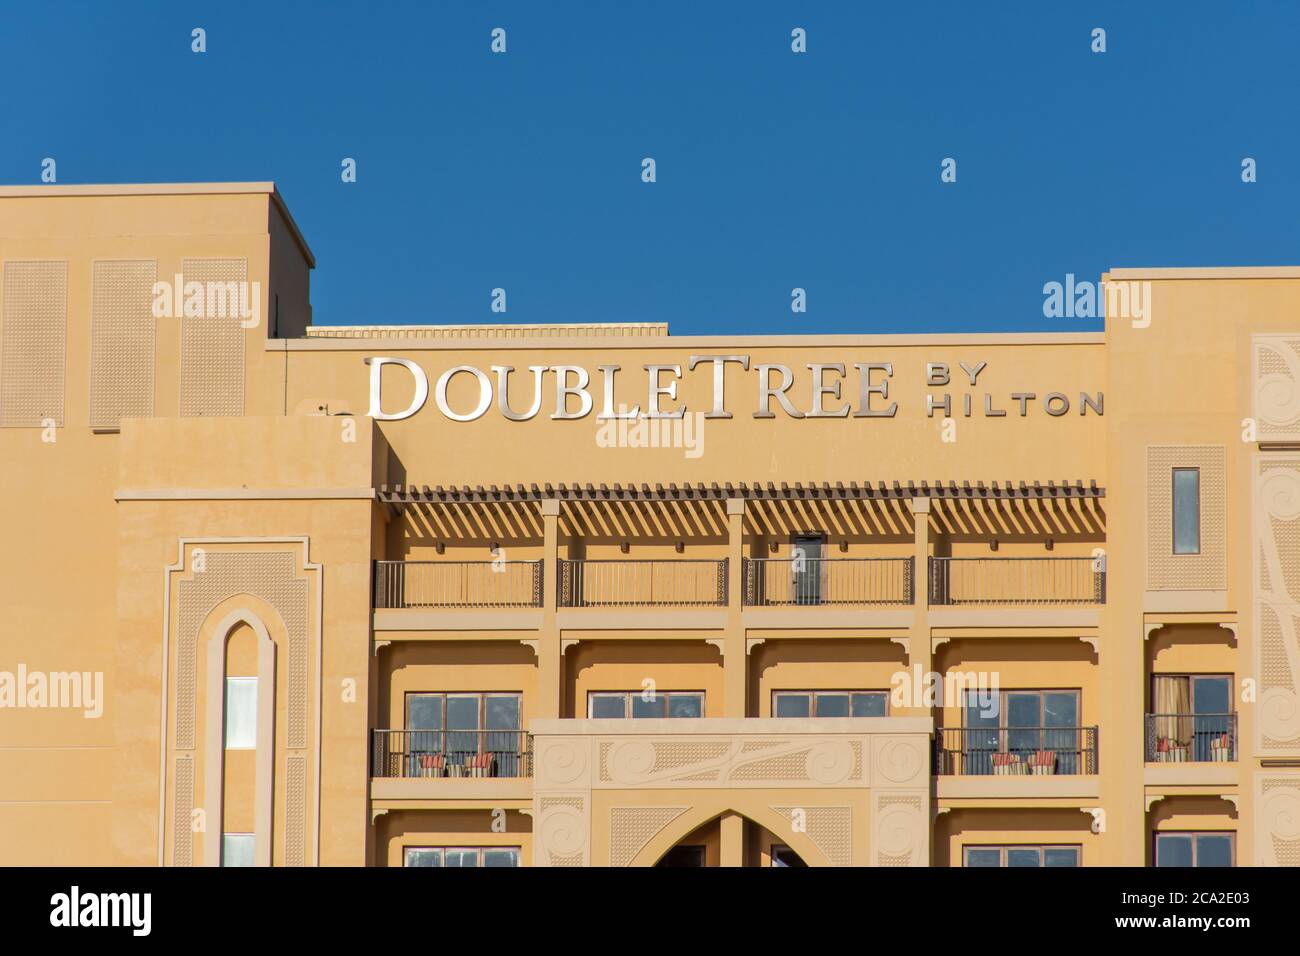 'Ras al Khaimah, Ras al Khaimah/United Arab Emirates - 2/14/2020: 'Hilton Double Tree Hotel close up of building sign against blue sky background Marj Stock Photo